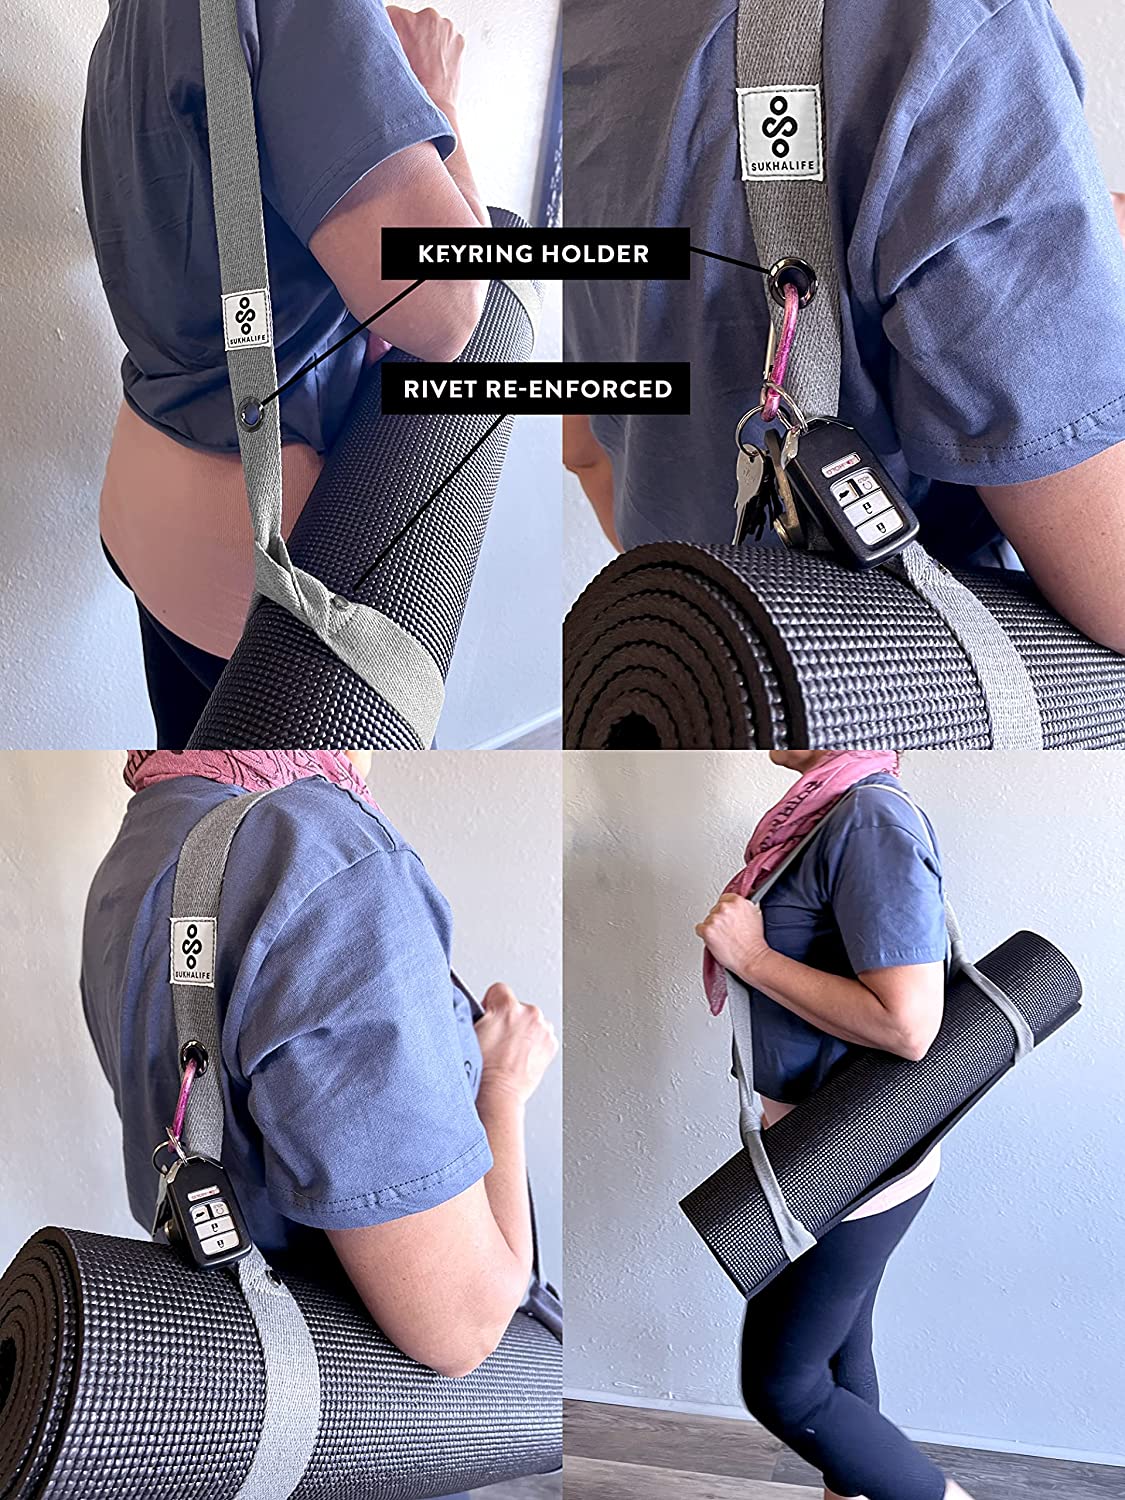 SukhaLife - Yoga Mat Carry Strap